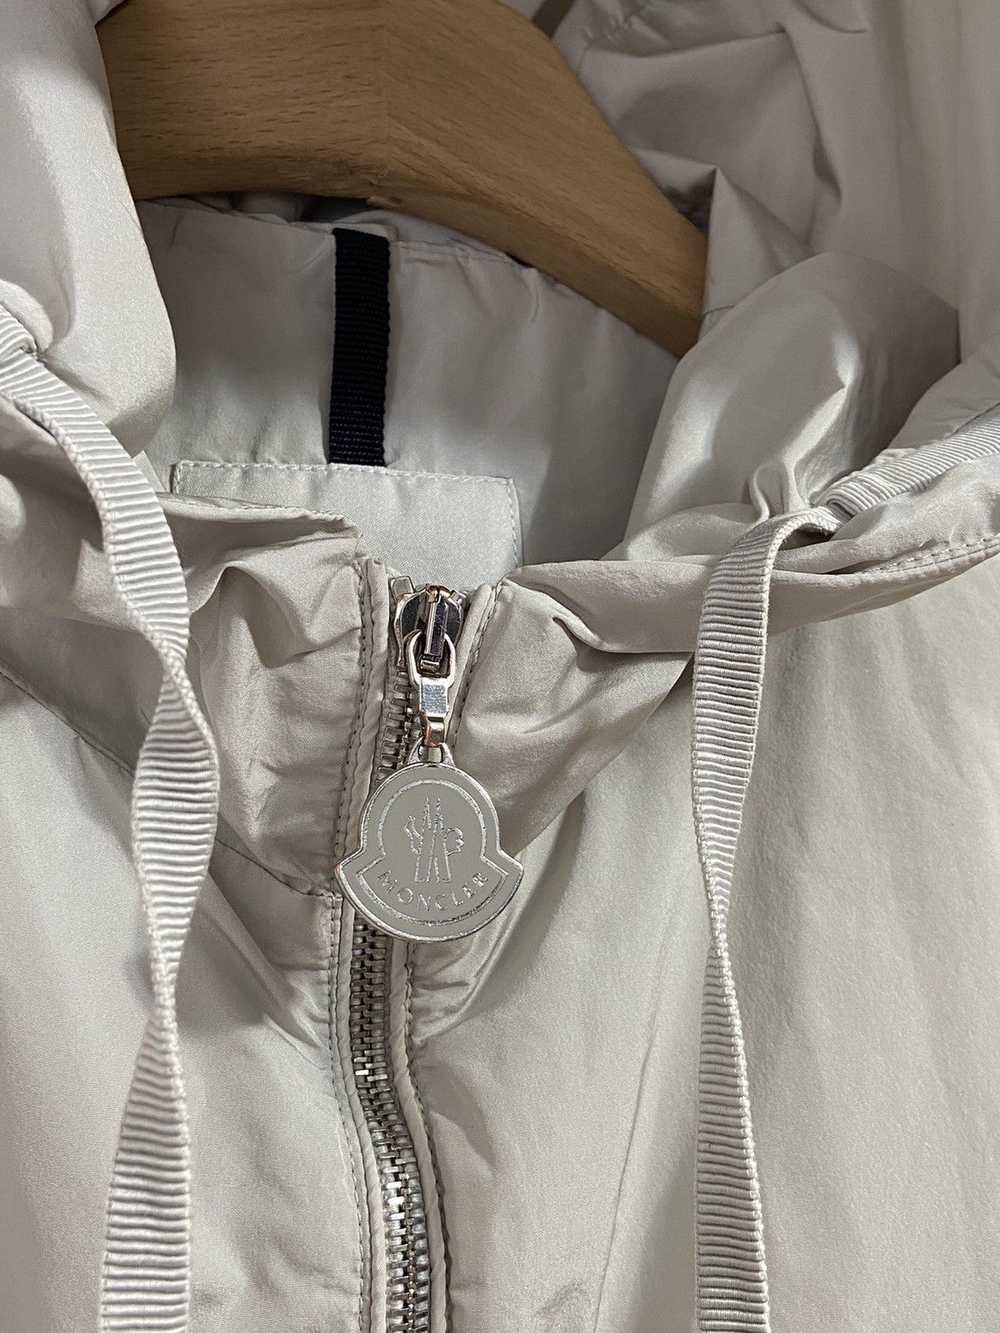 Luxury × Moncler Moncler Giubbotto Woman’s Jacket - image 4